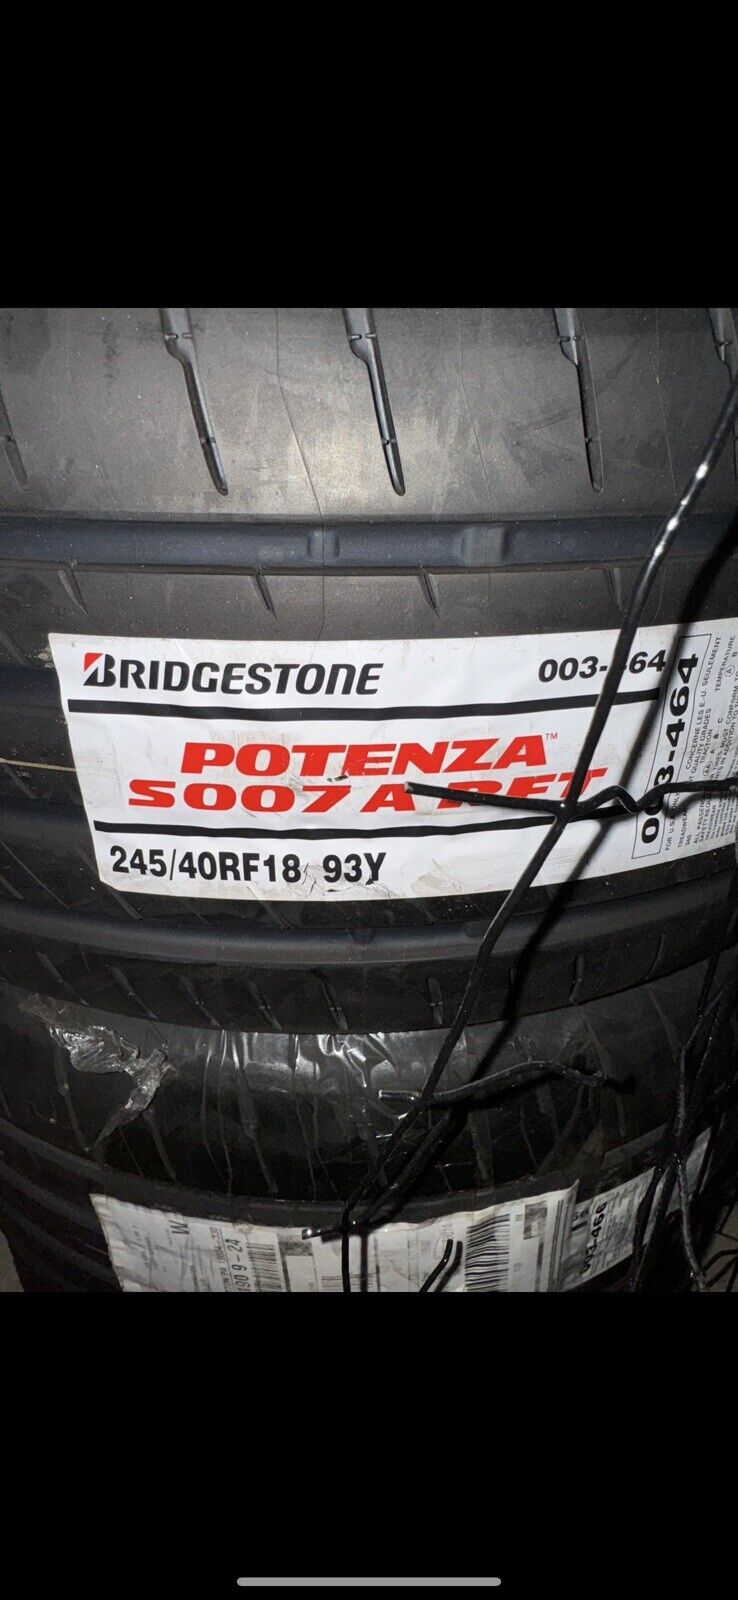 New 2019 Bridgestone Tires (4) 245/35/18 Summer 275/35/18 RFT BMW E39 M5 size